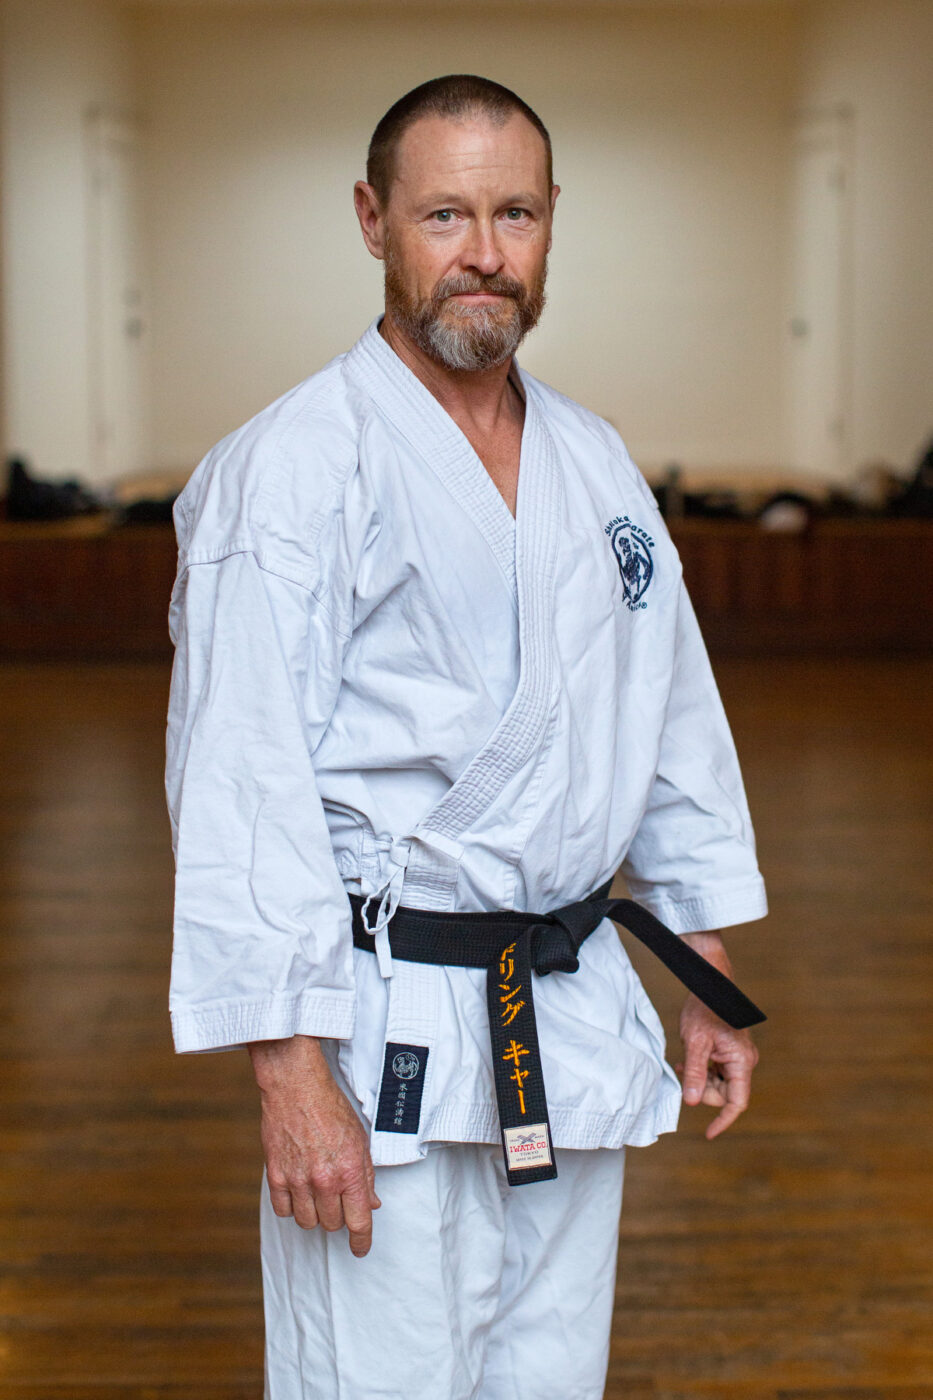 Karate instructor Keir Beading